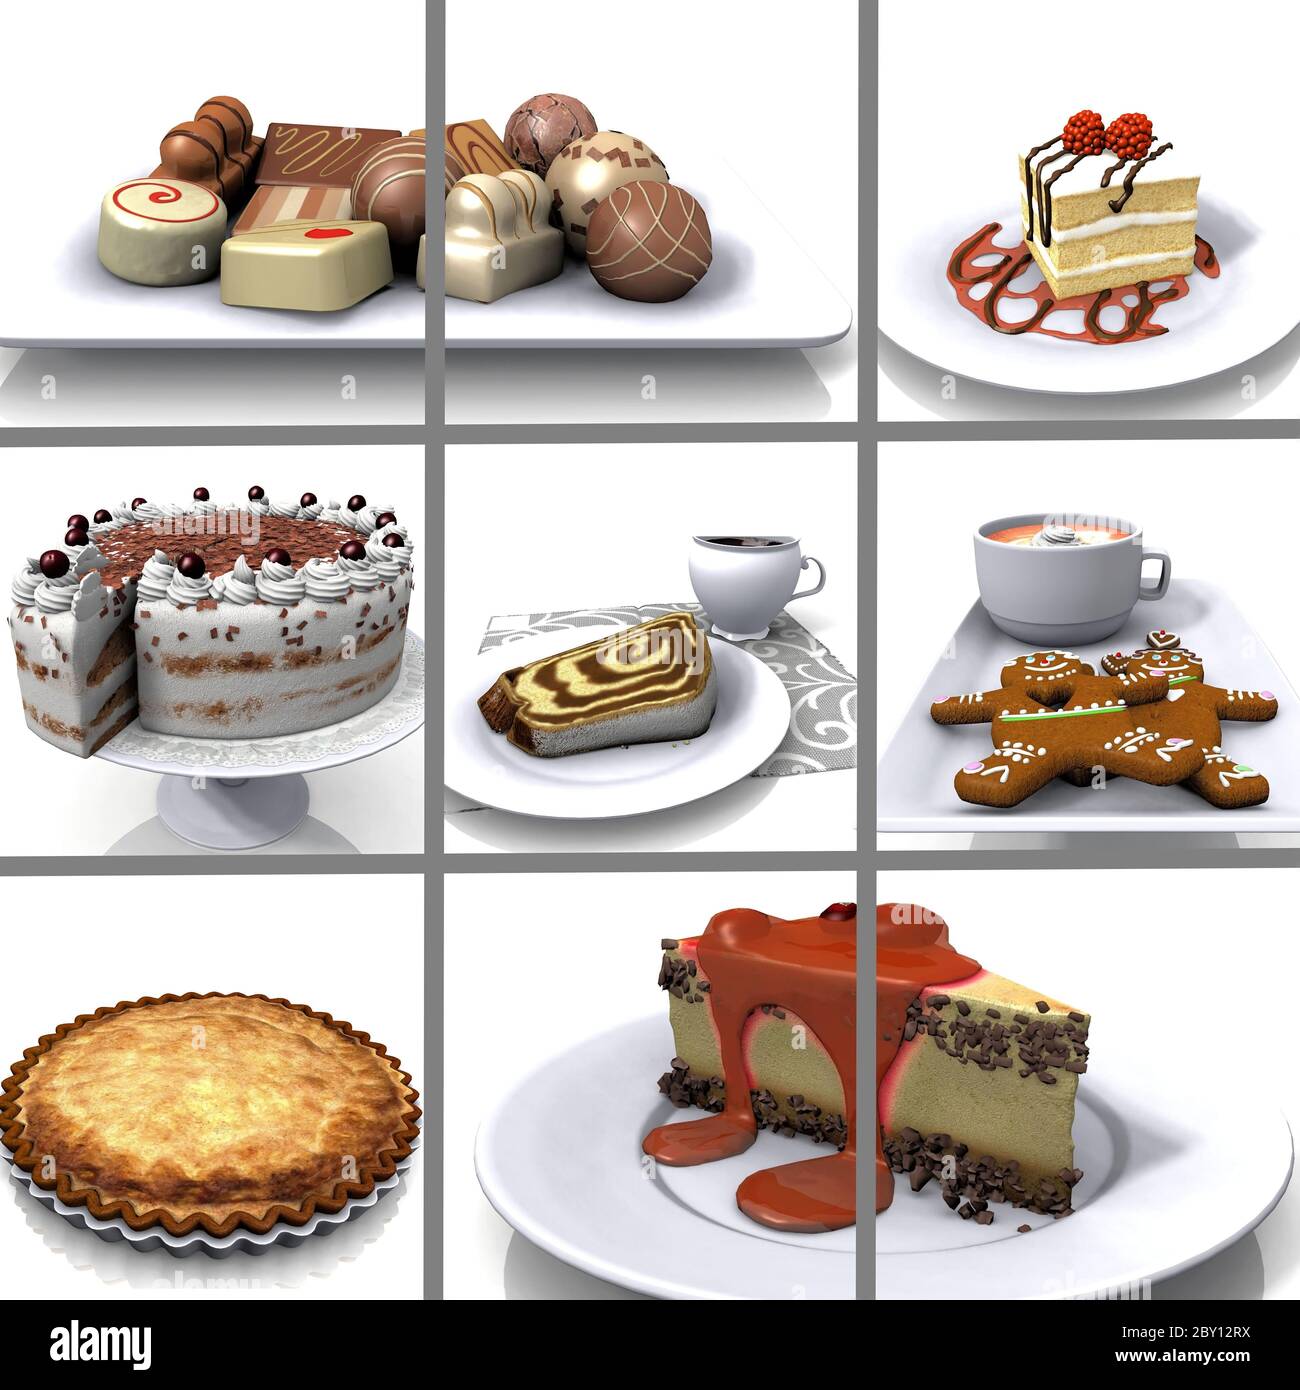 The Sims Resource - Raspberry Cream Wedding Cake